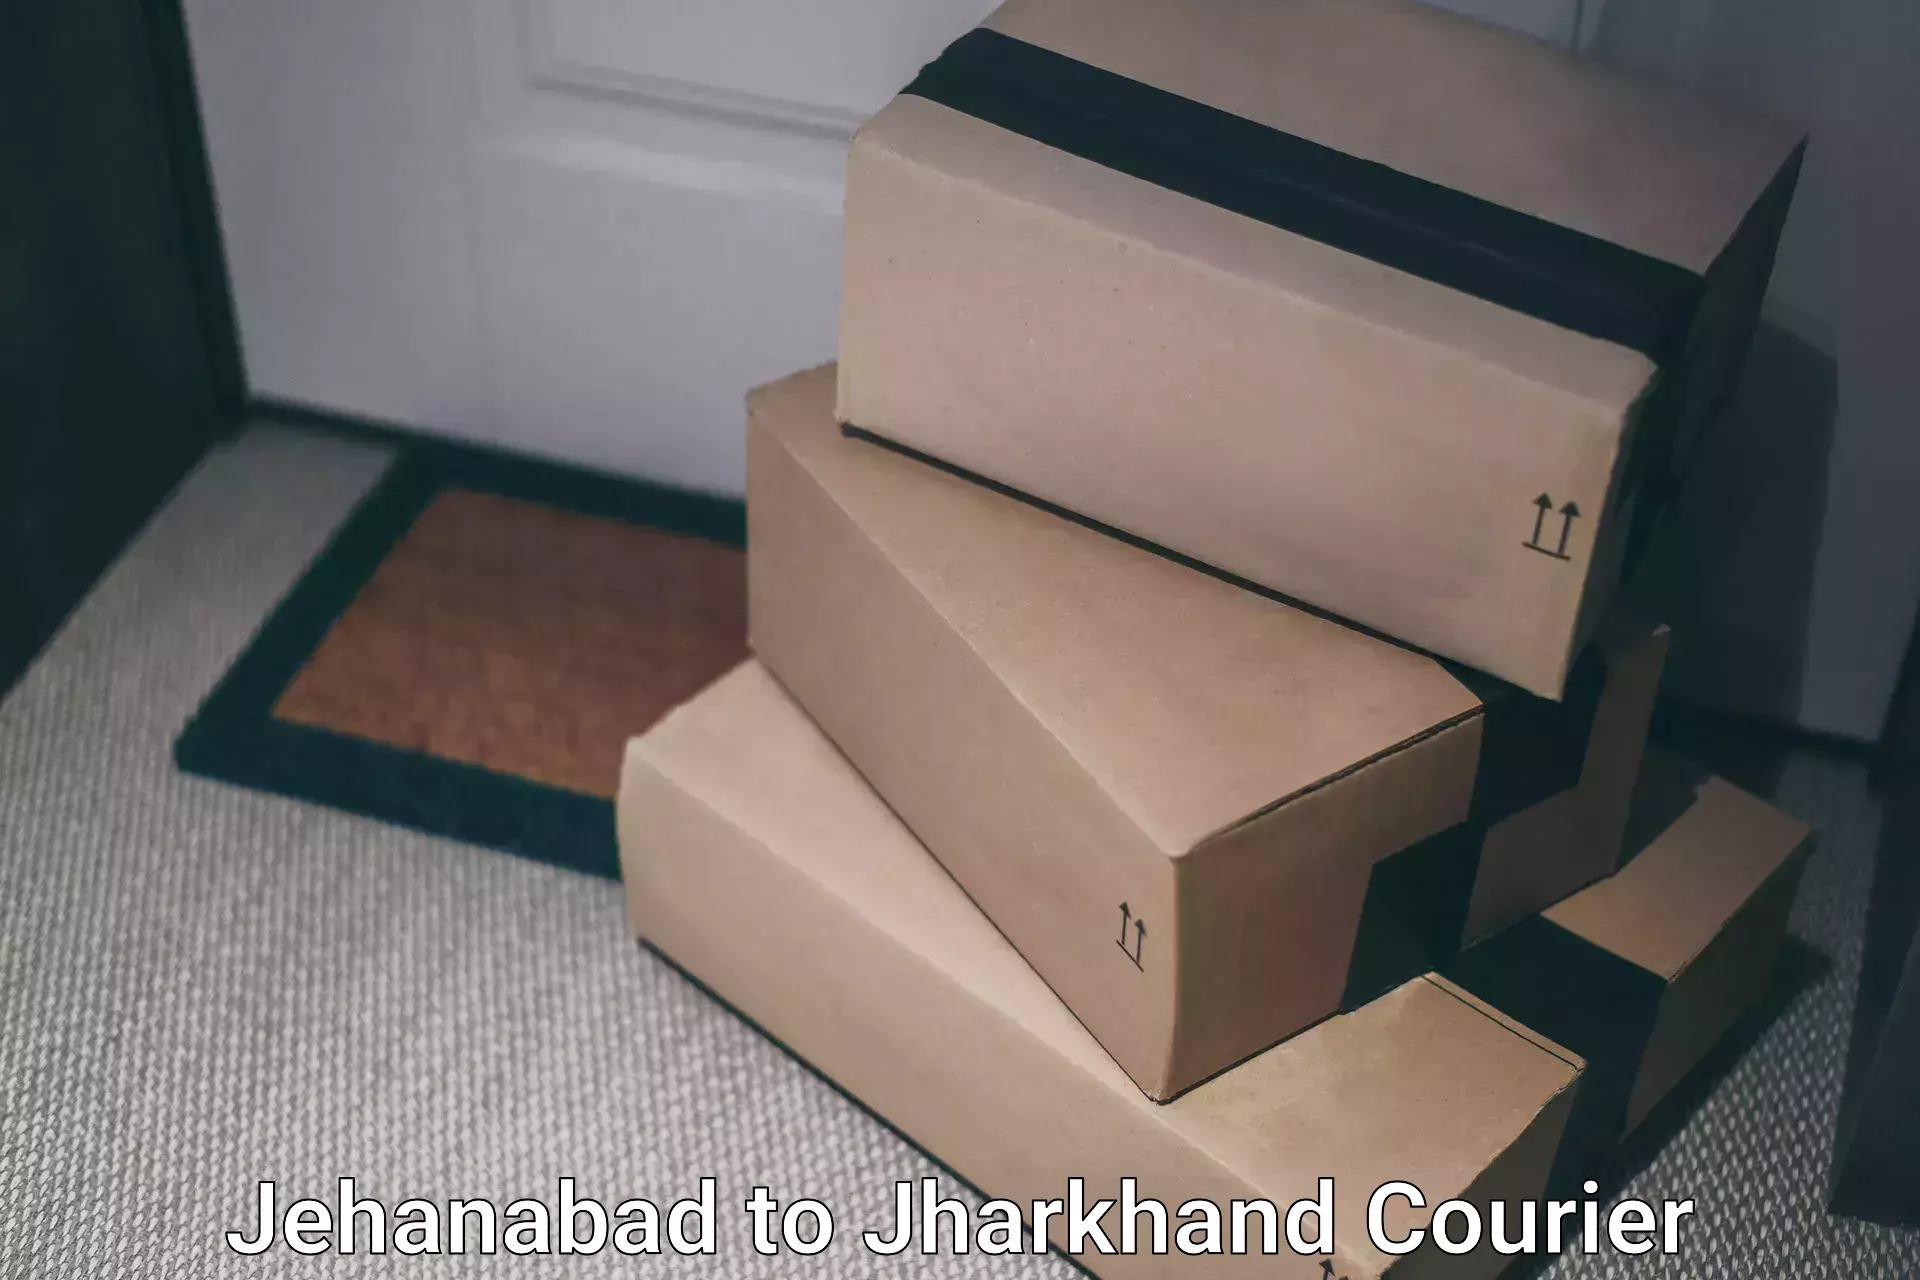 Ground shipping Jehanabad to Bokaro